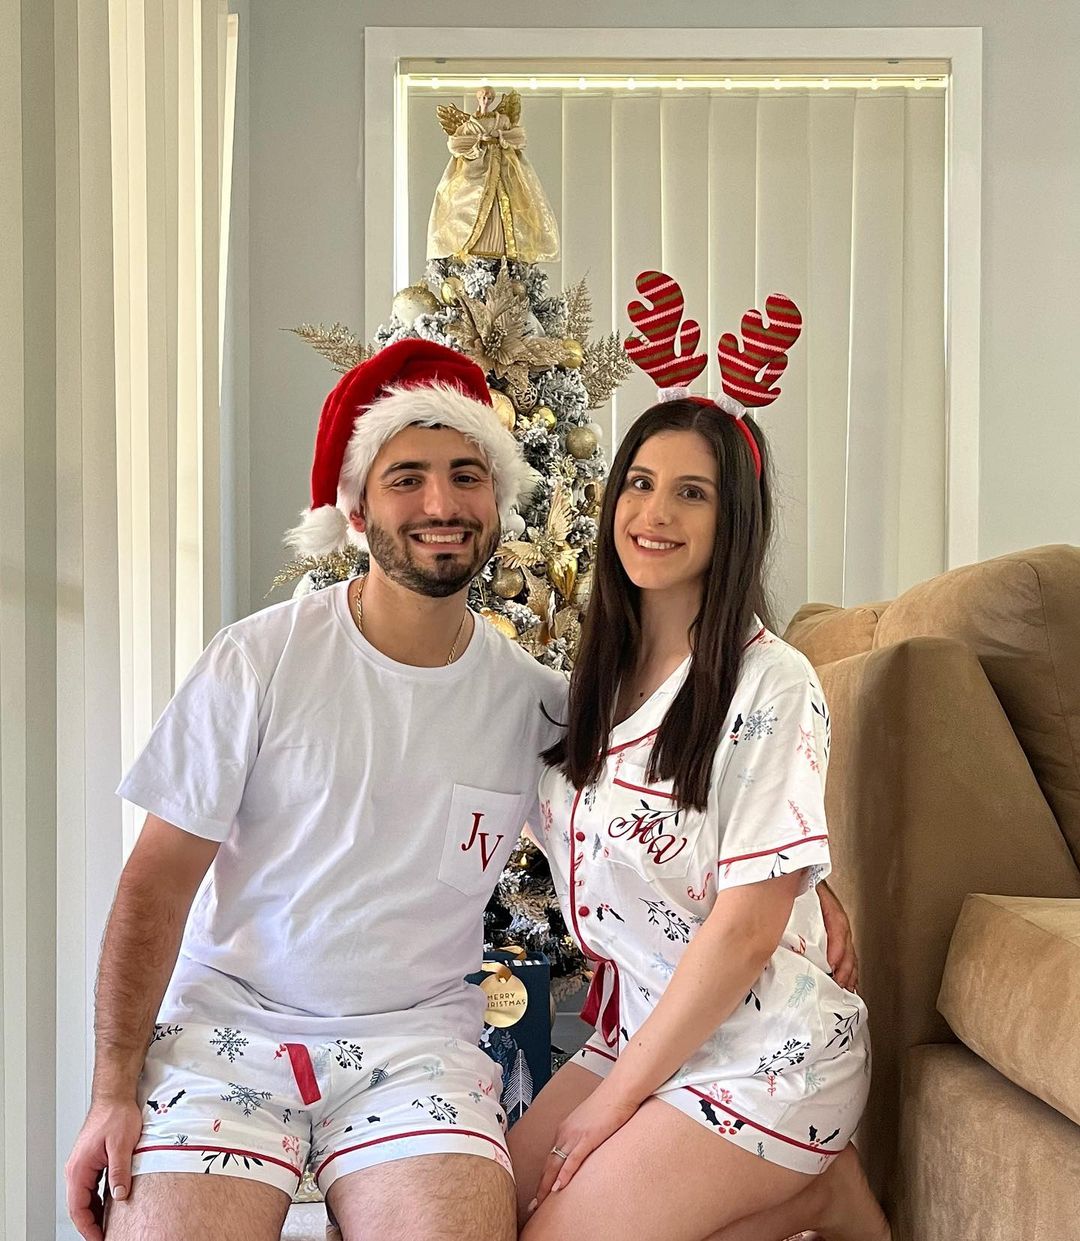 Exclusive Christmas Satin Personalised Pyjama Set - Traditional Print